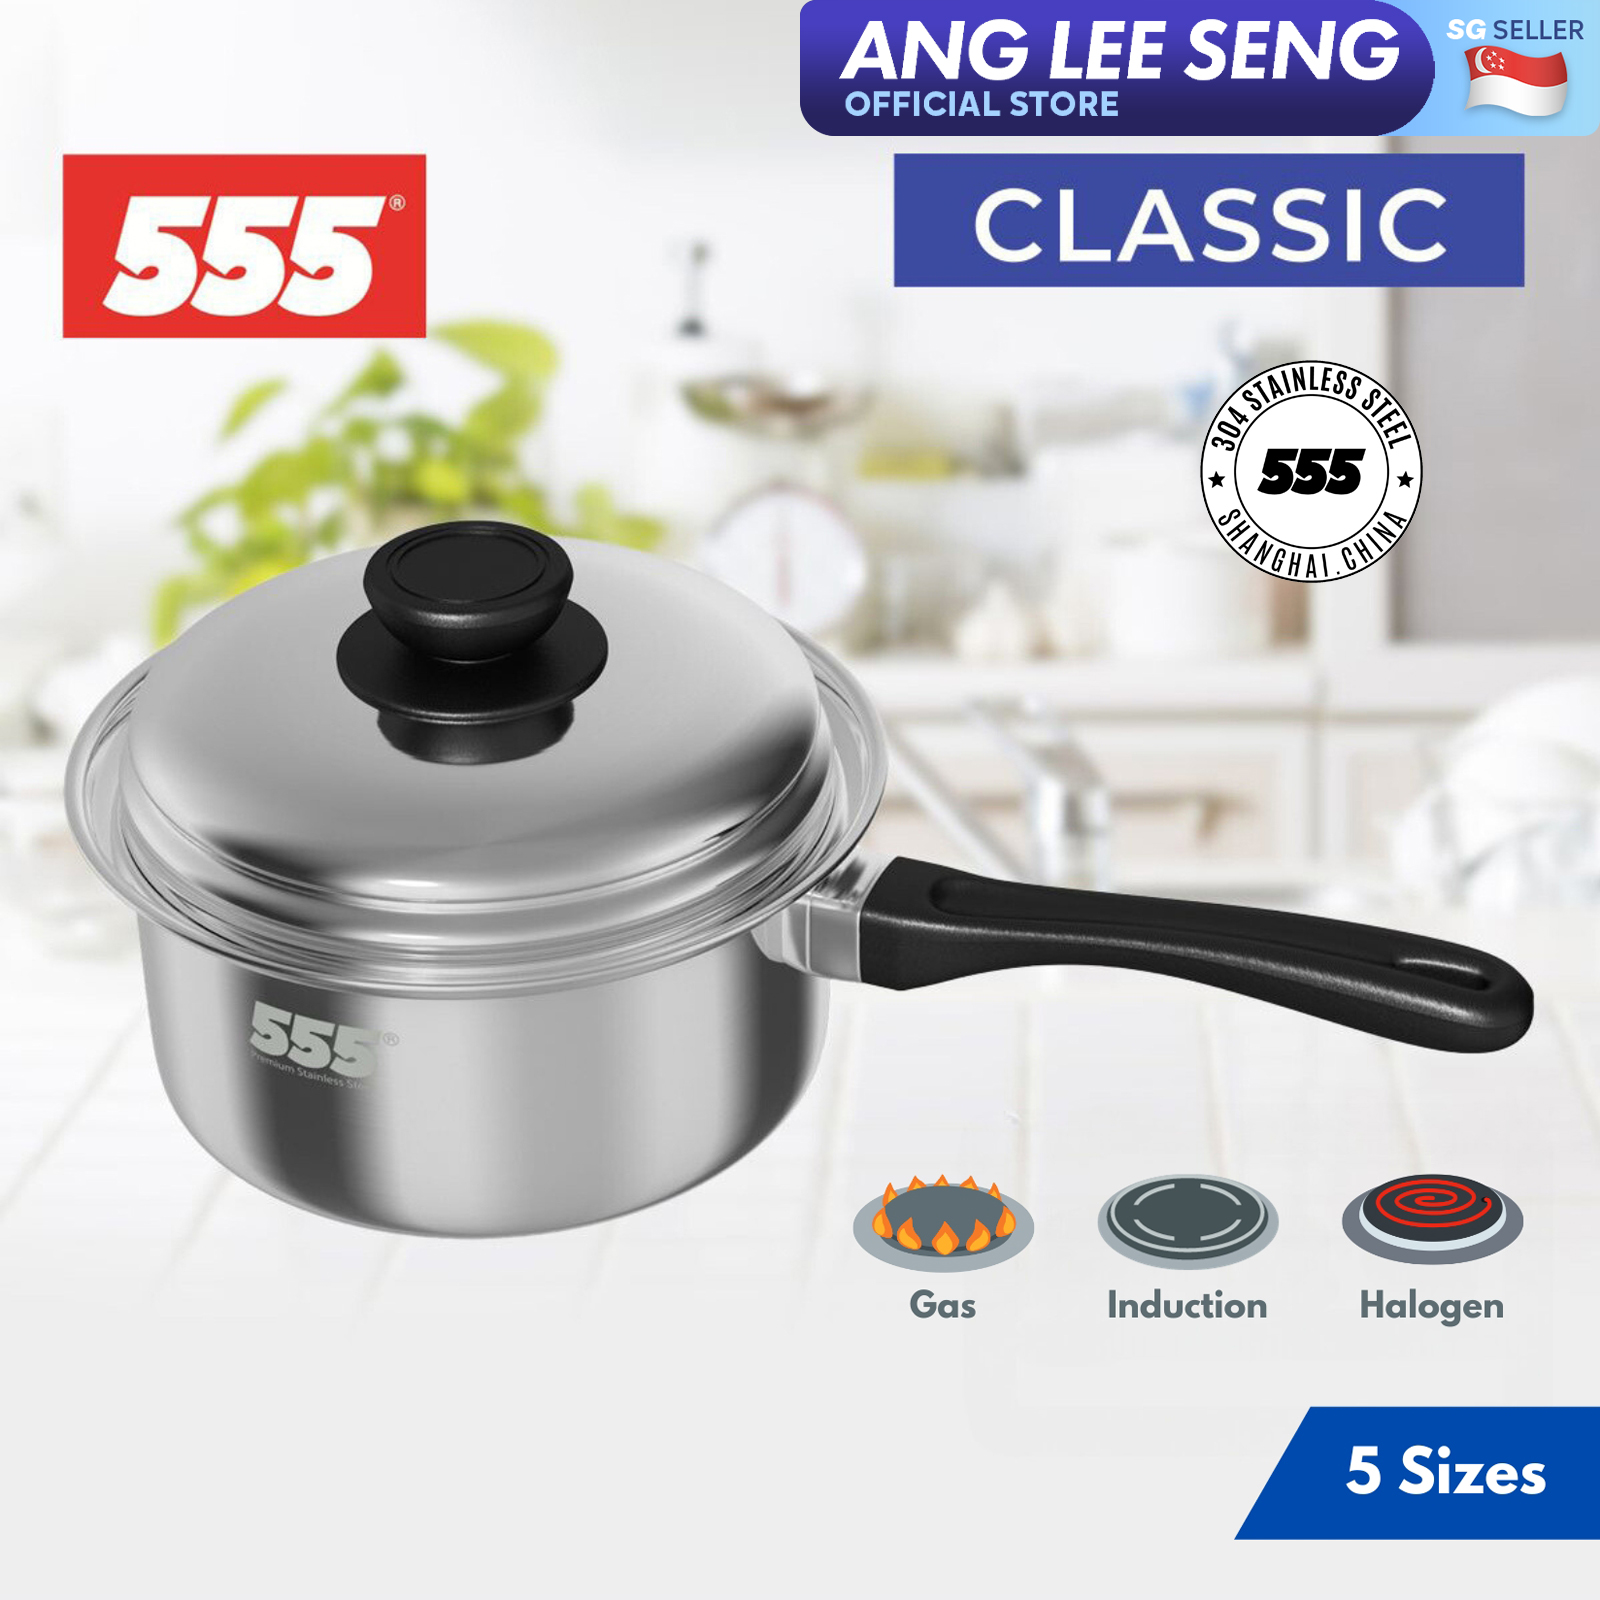 555 Classic Stainless Steel Saucepan